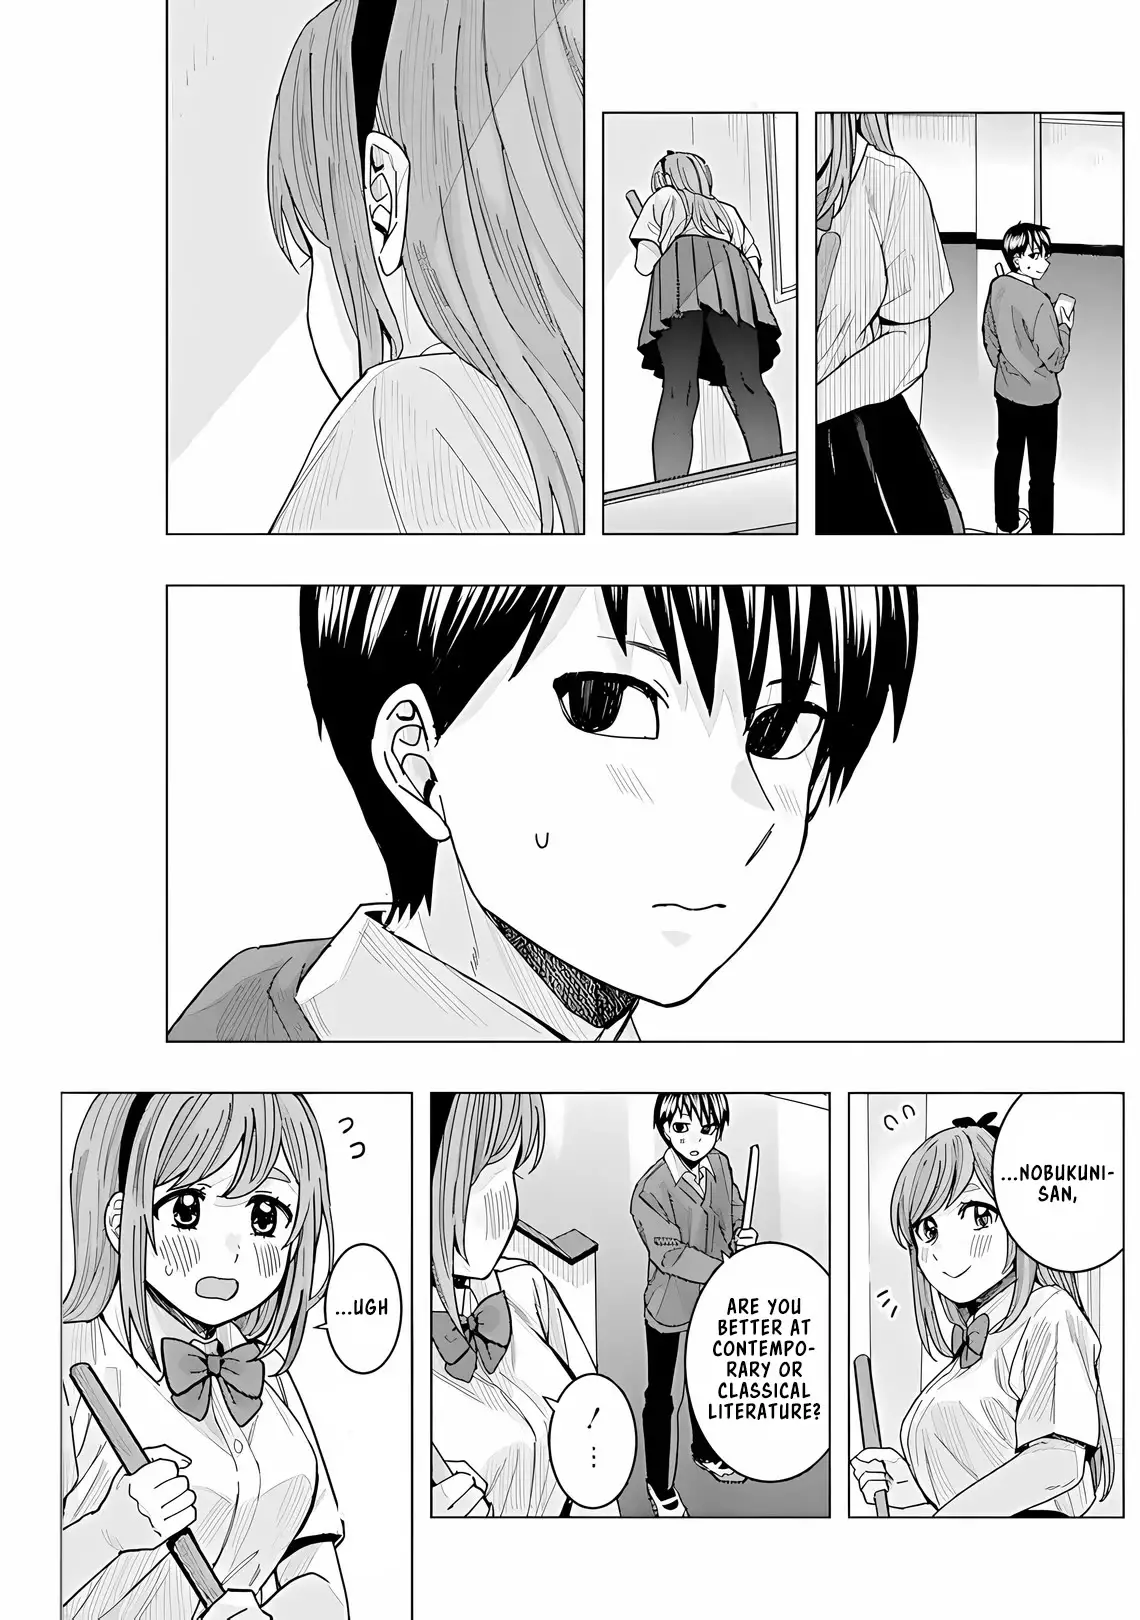 "nobukuni-San" Does She Like Me? - 27 page 8-e877673d